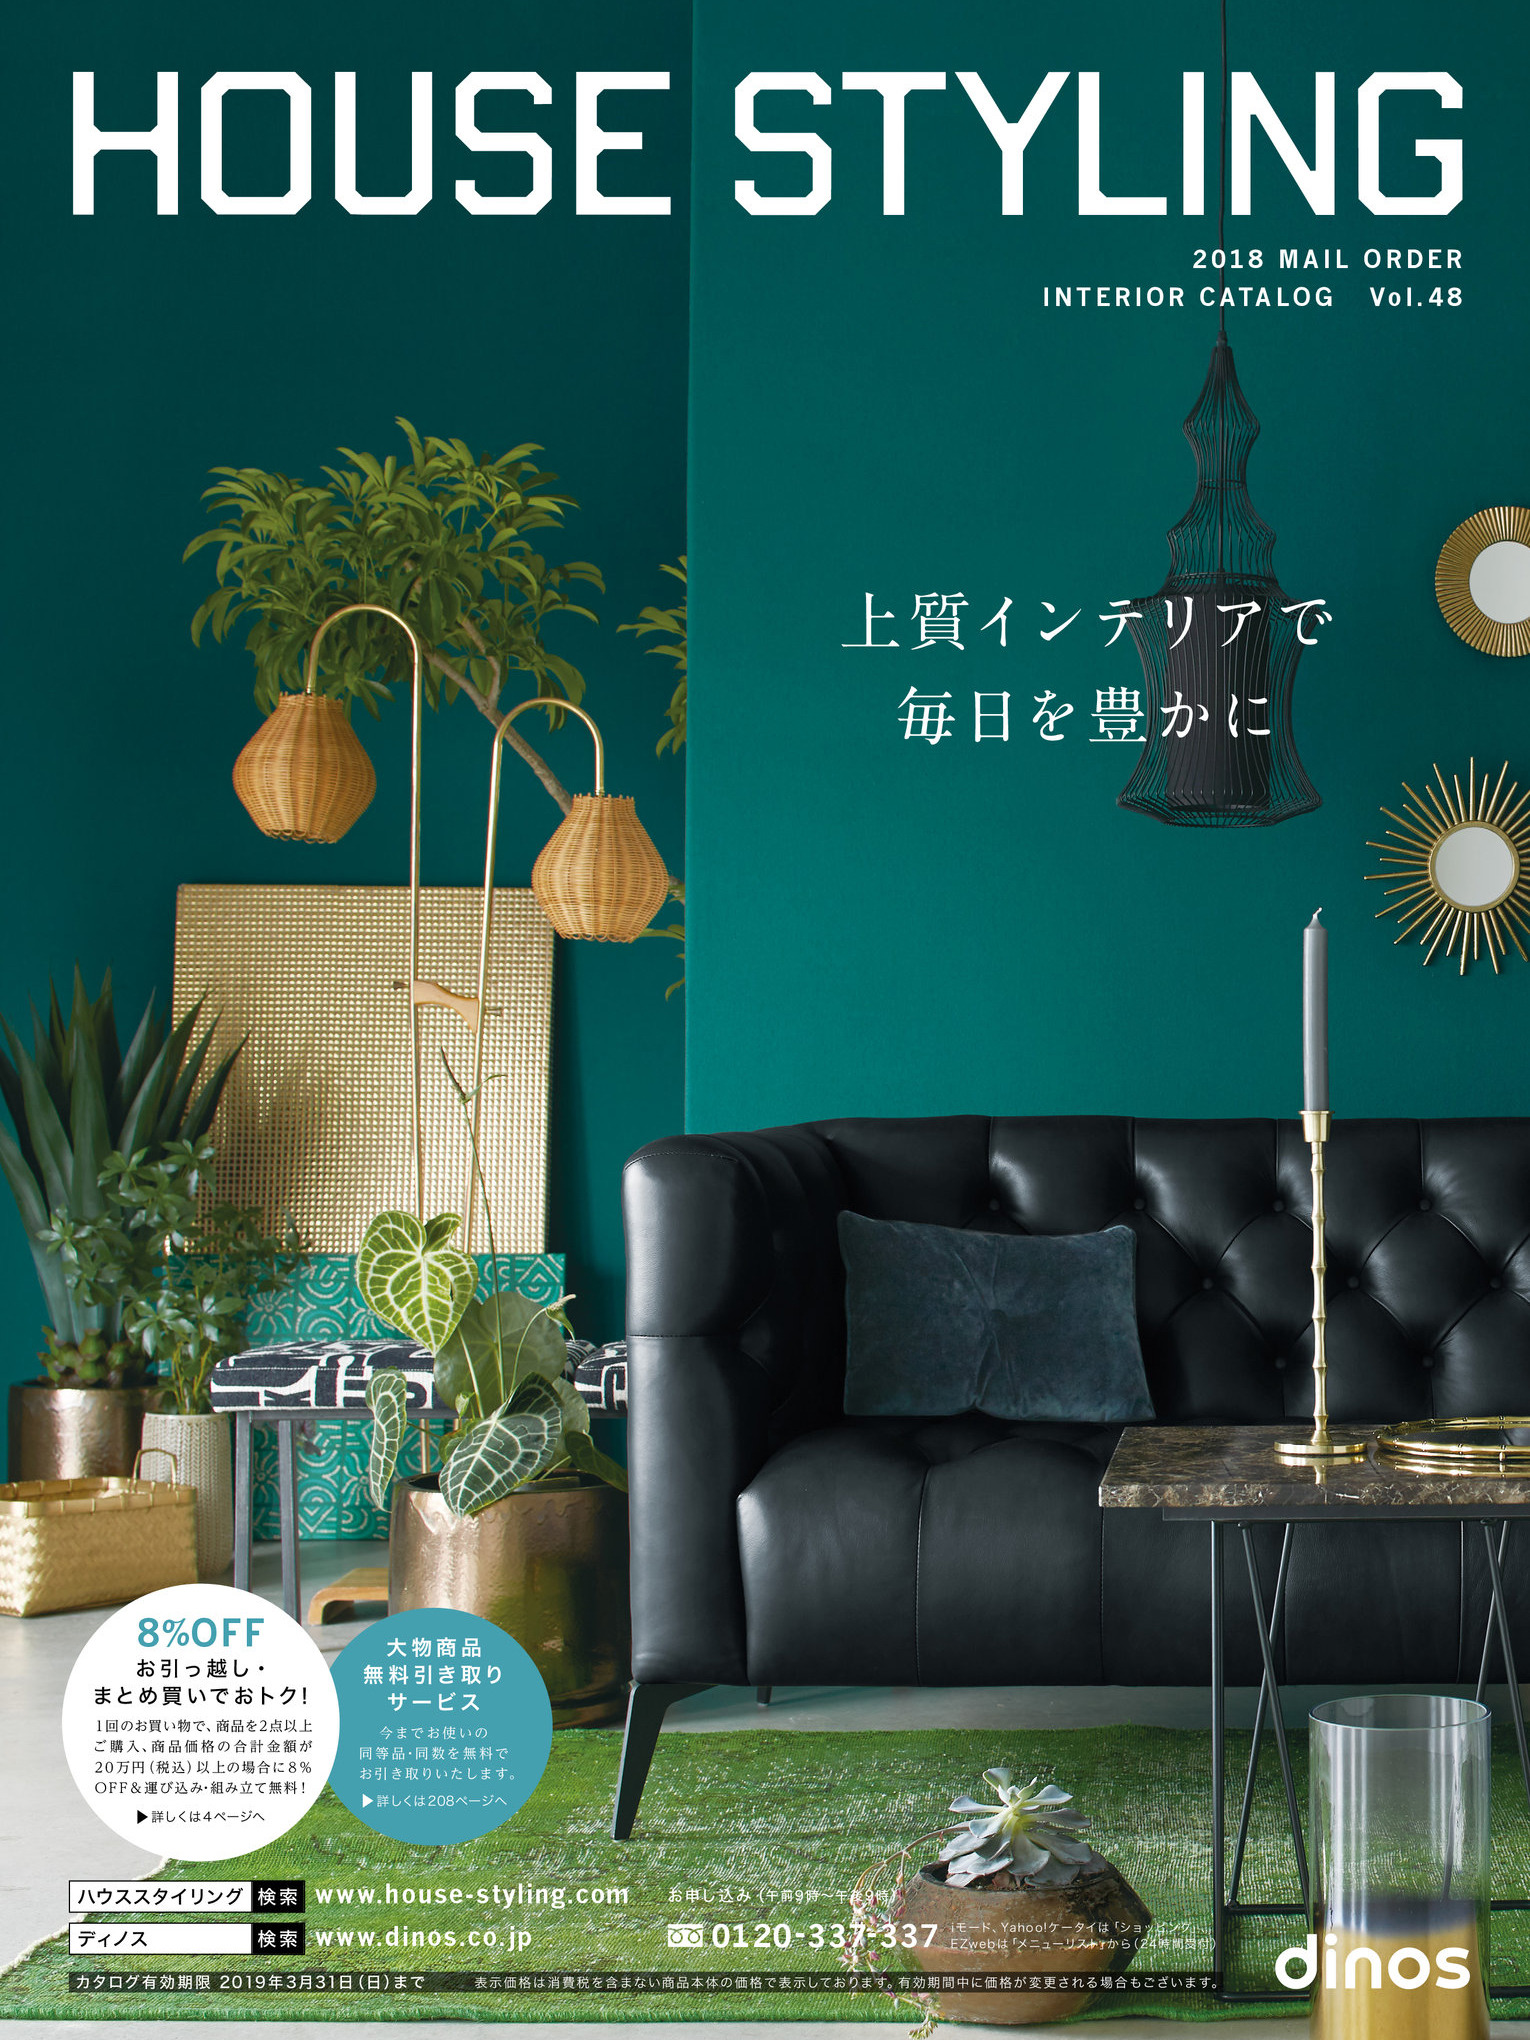 《House Styling》日本版时尚布艺杂志2018年春夏号